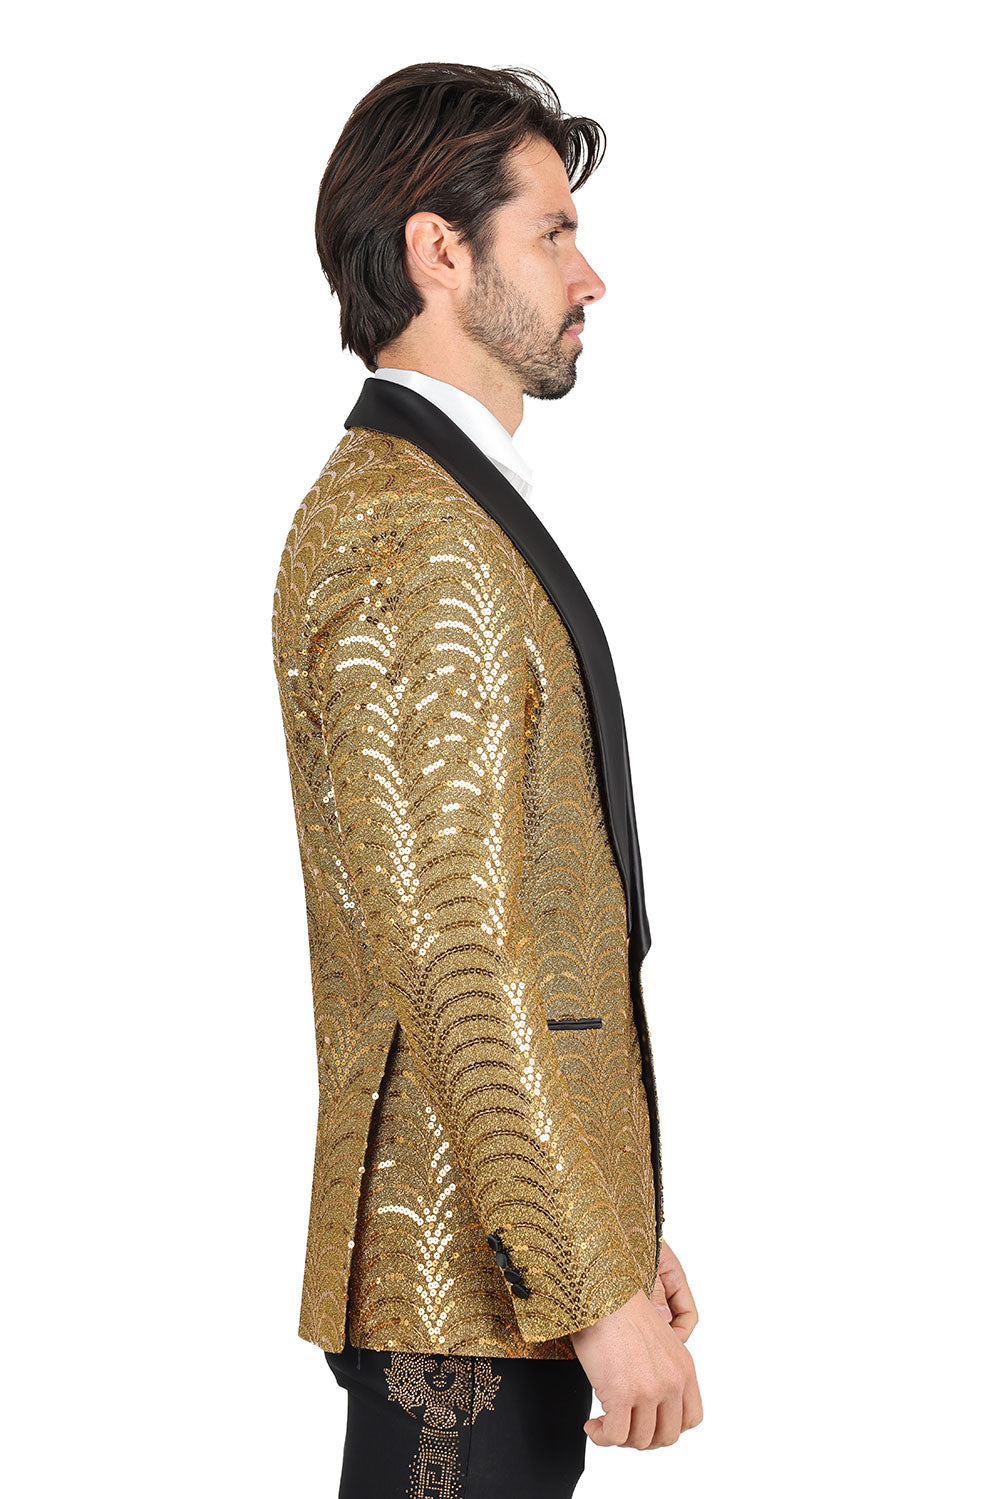 BARABAS Men's High Fashion Sequin Shawl Satin Lapel Blazer 2BLR8 Black Gold